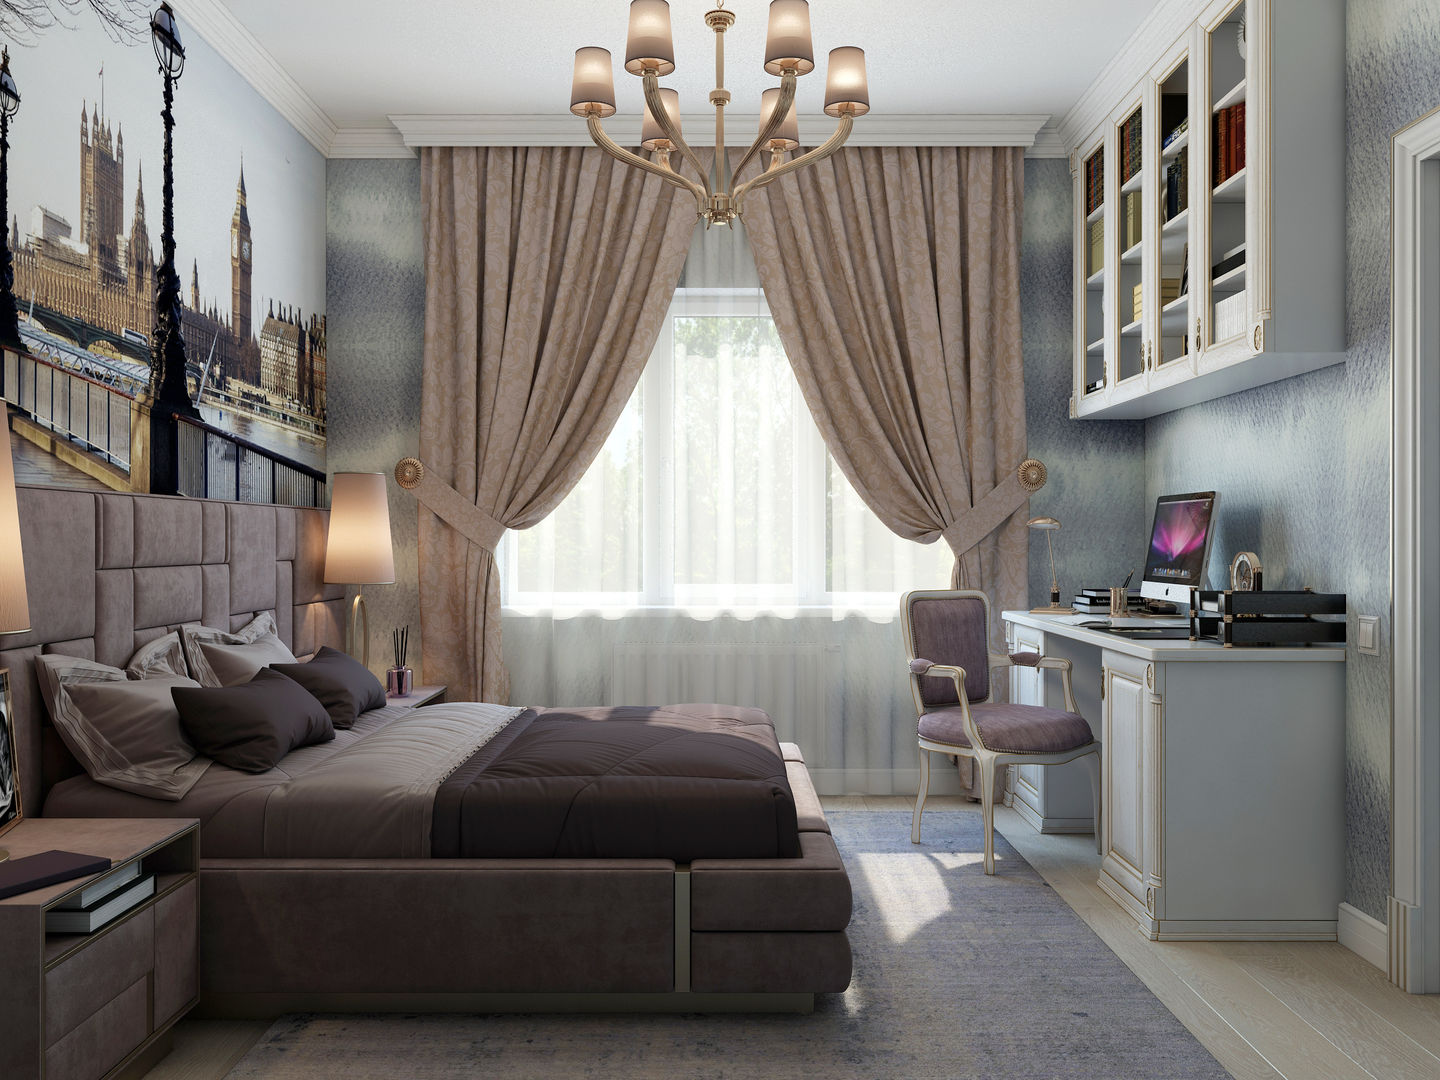 Спальня "London", Студия дизайна Дарьи Одарюк Студия дизайна Дарьи Одарюк Dormitorios eclécticos